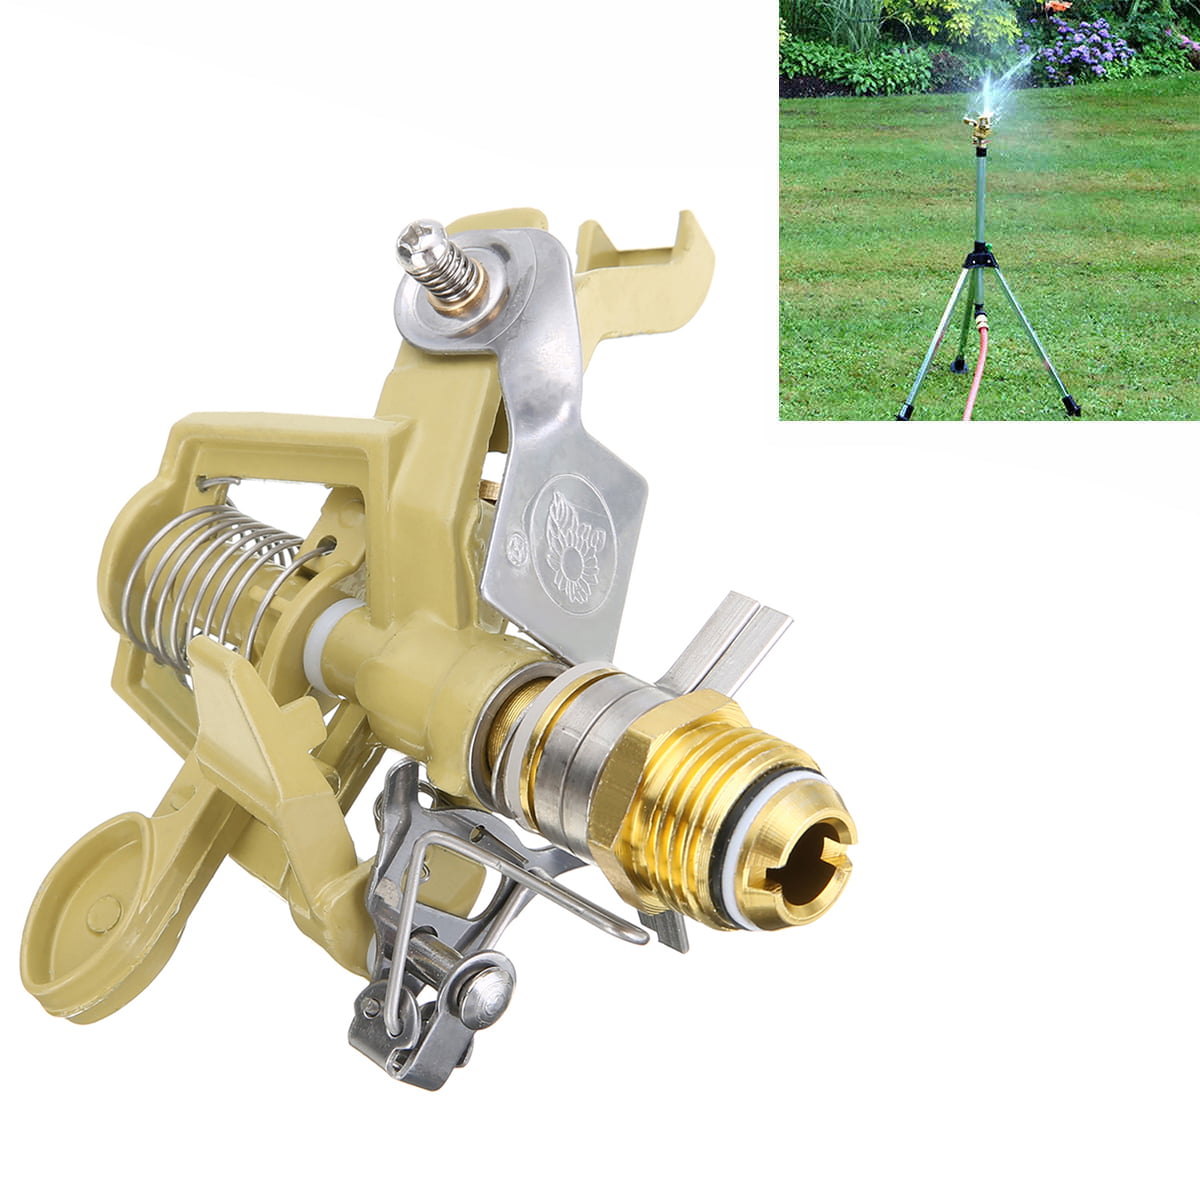 1 Pc Garden Yard Grass Metal Impulse Spike Water Watering Sprinkler Sprayer New 